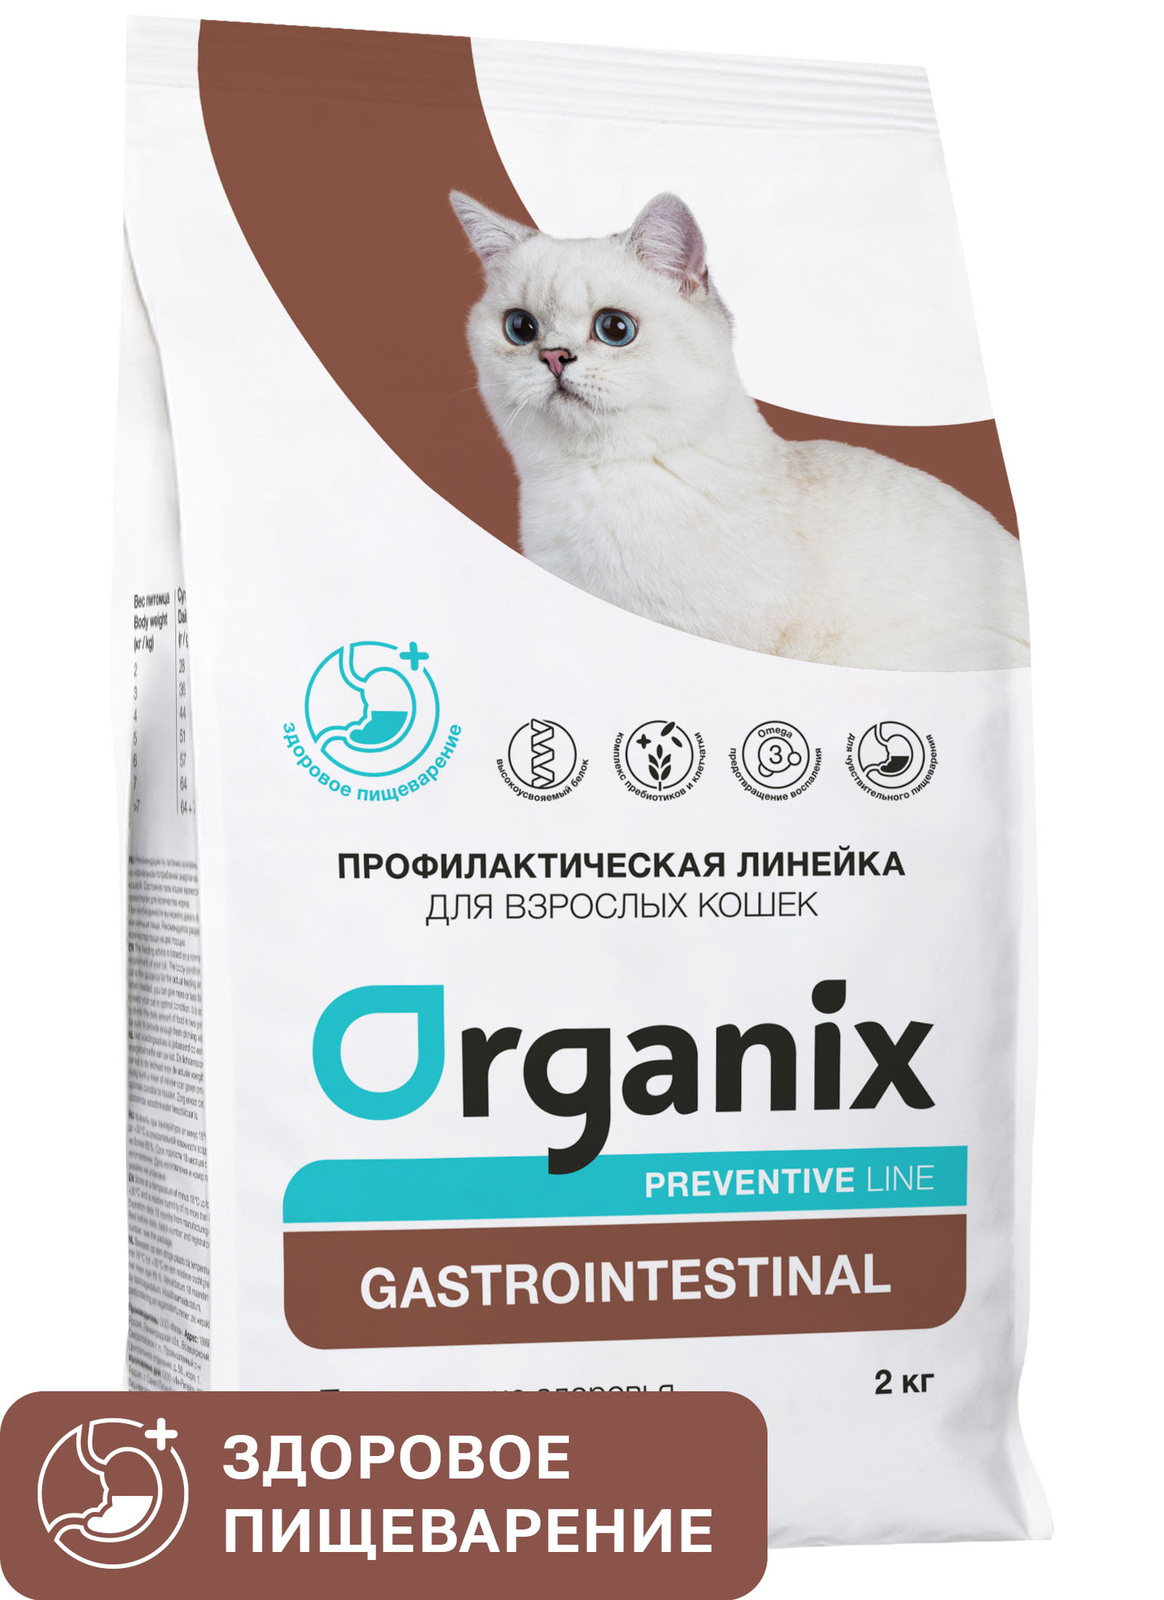 Organix Preventive Line gastrointestinal сухой корм для кошек 